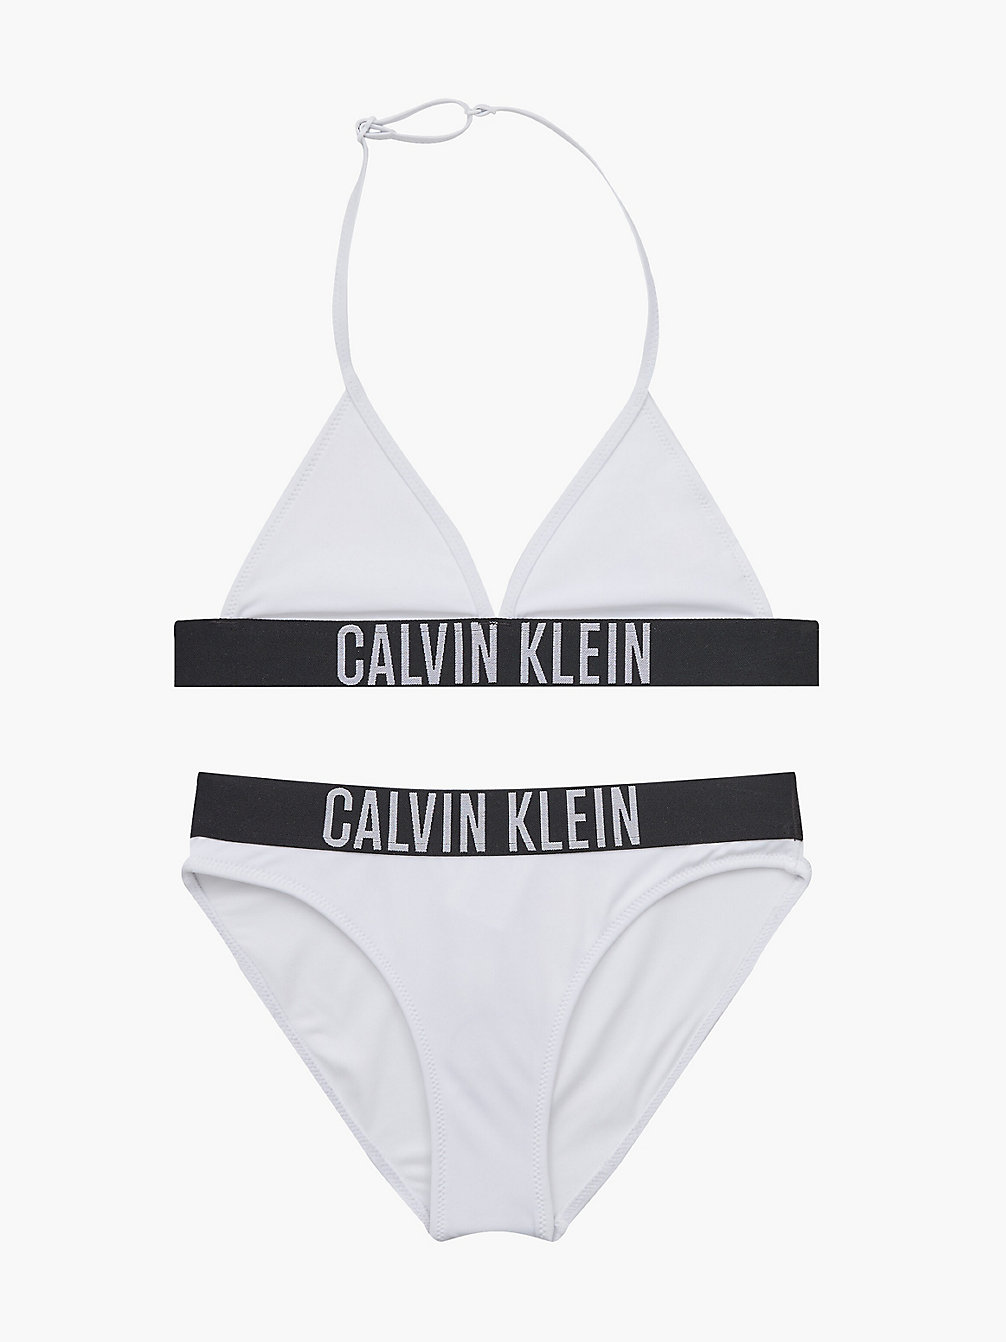 PVH CLASSIC WHITE Girls Triangle Bikini Set - Intense Power undefined girls Calvin Klein